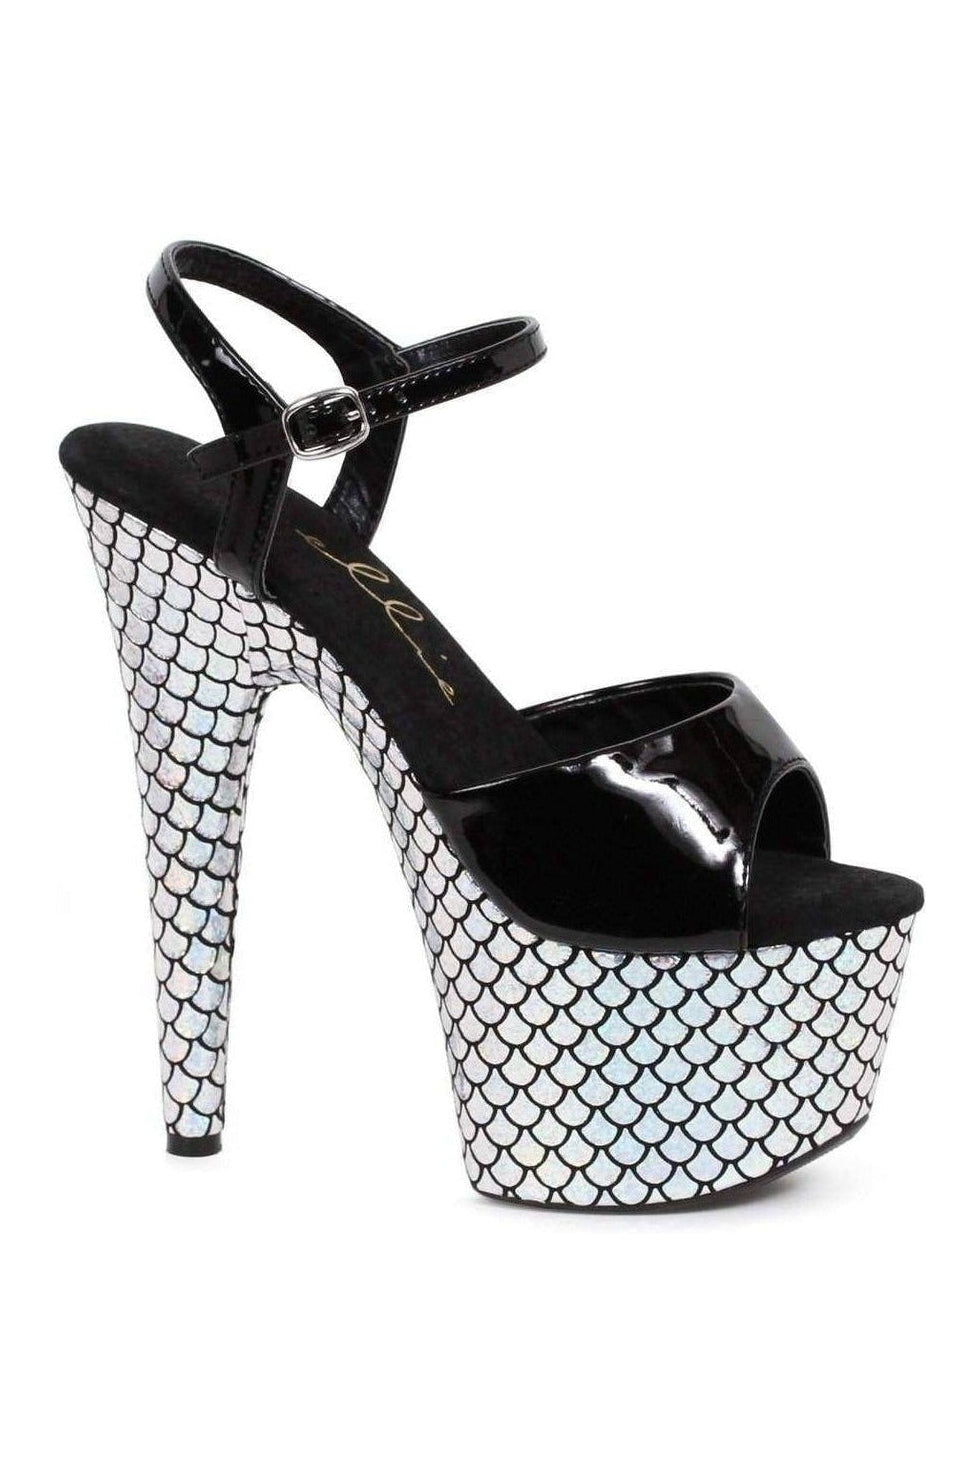 Ellie Shoes Clear Sandals Platform Stripper Shoes | Buy at Sexyshoes.com